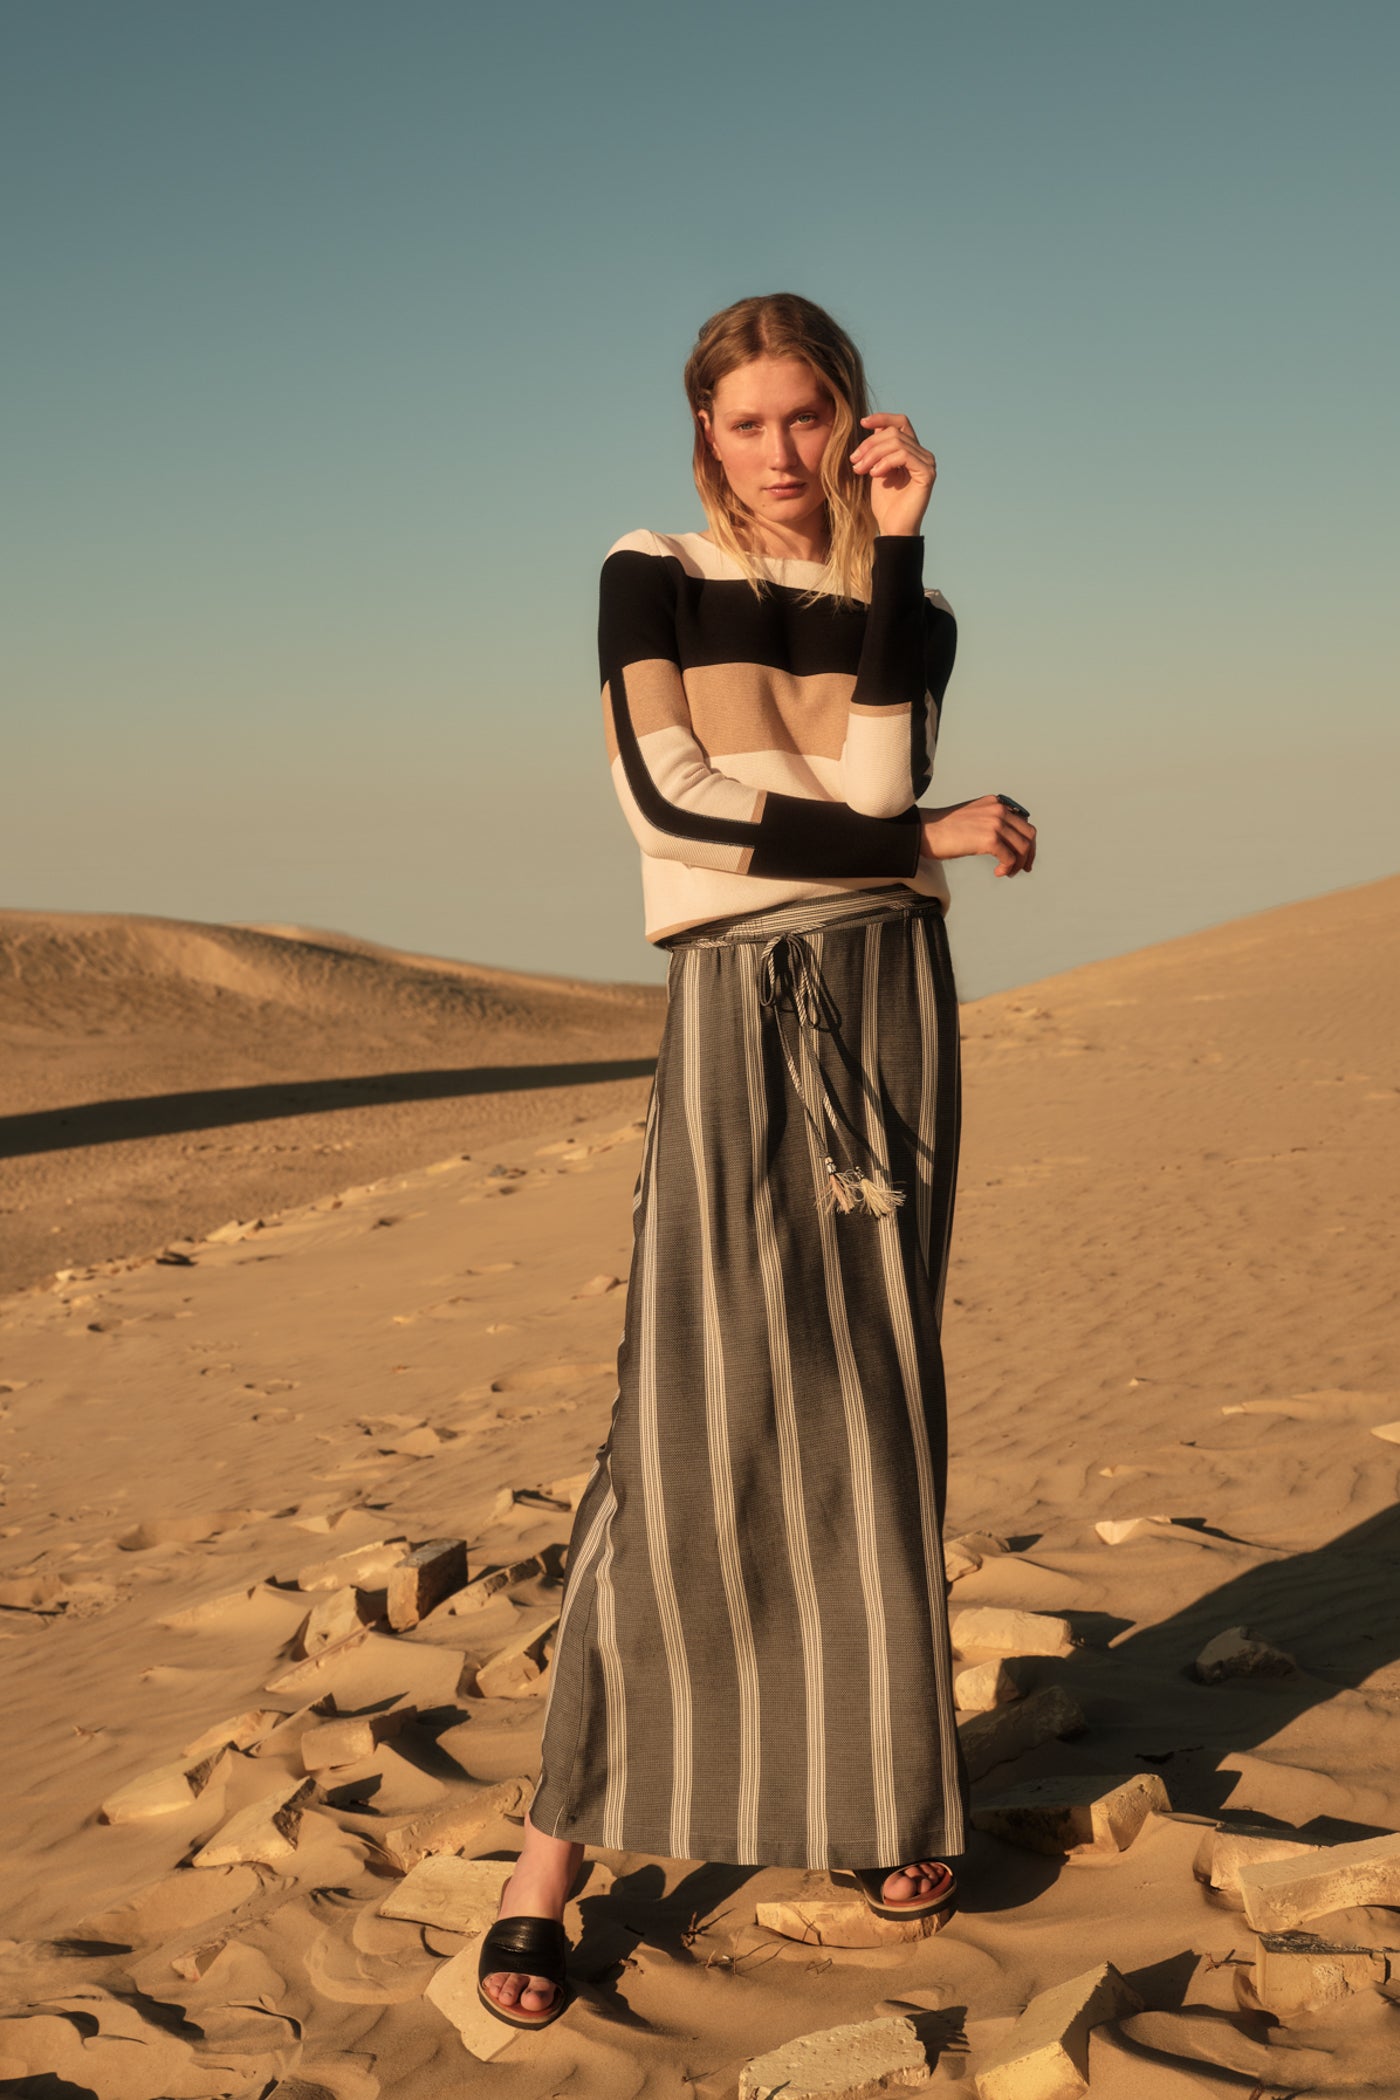 Lanius Striped Maxi Skirt (Final Sale)